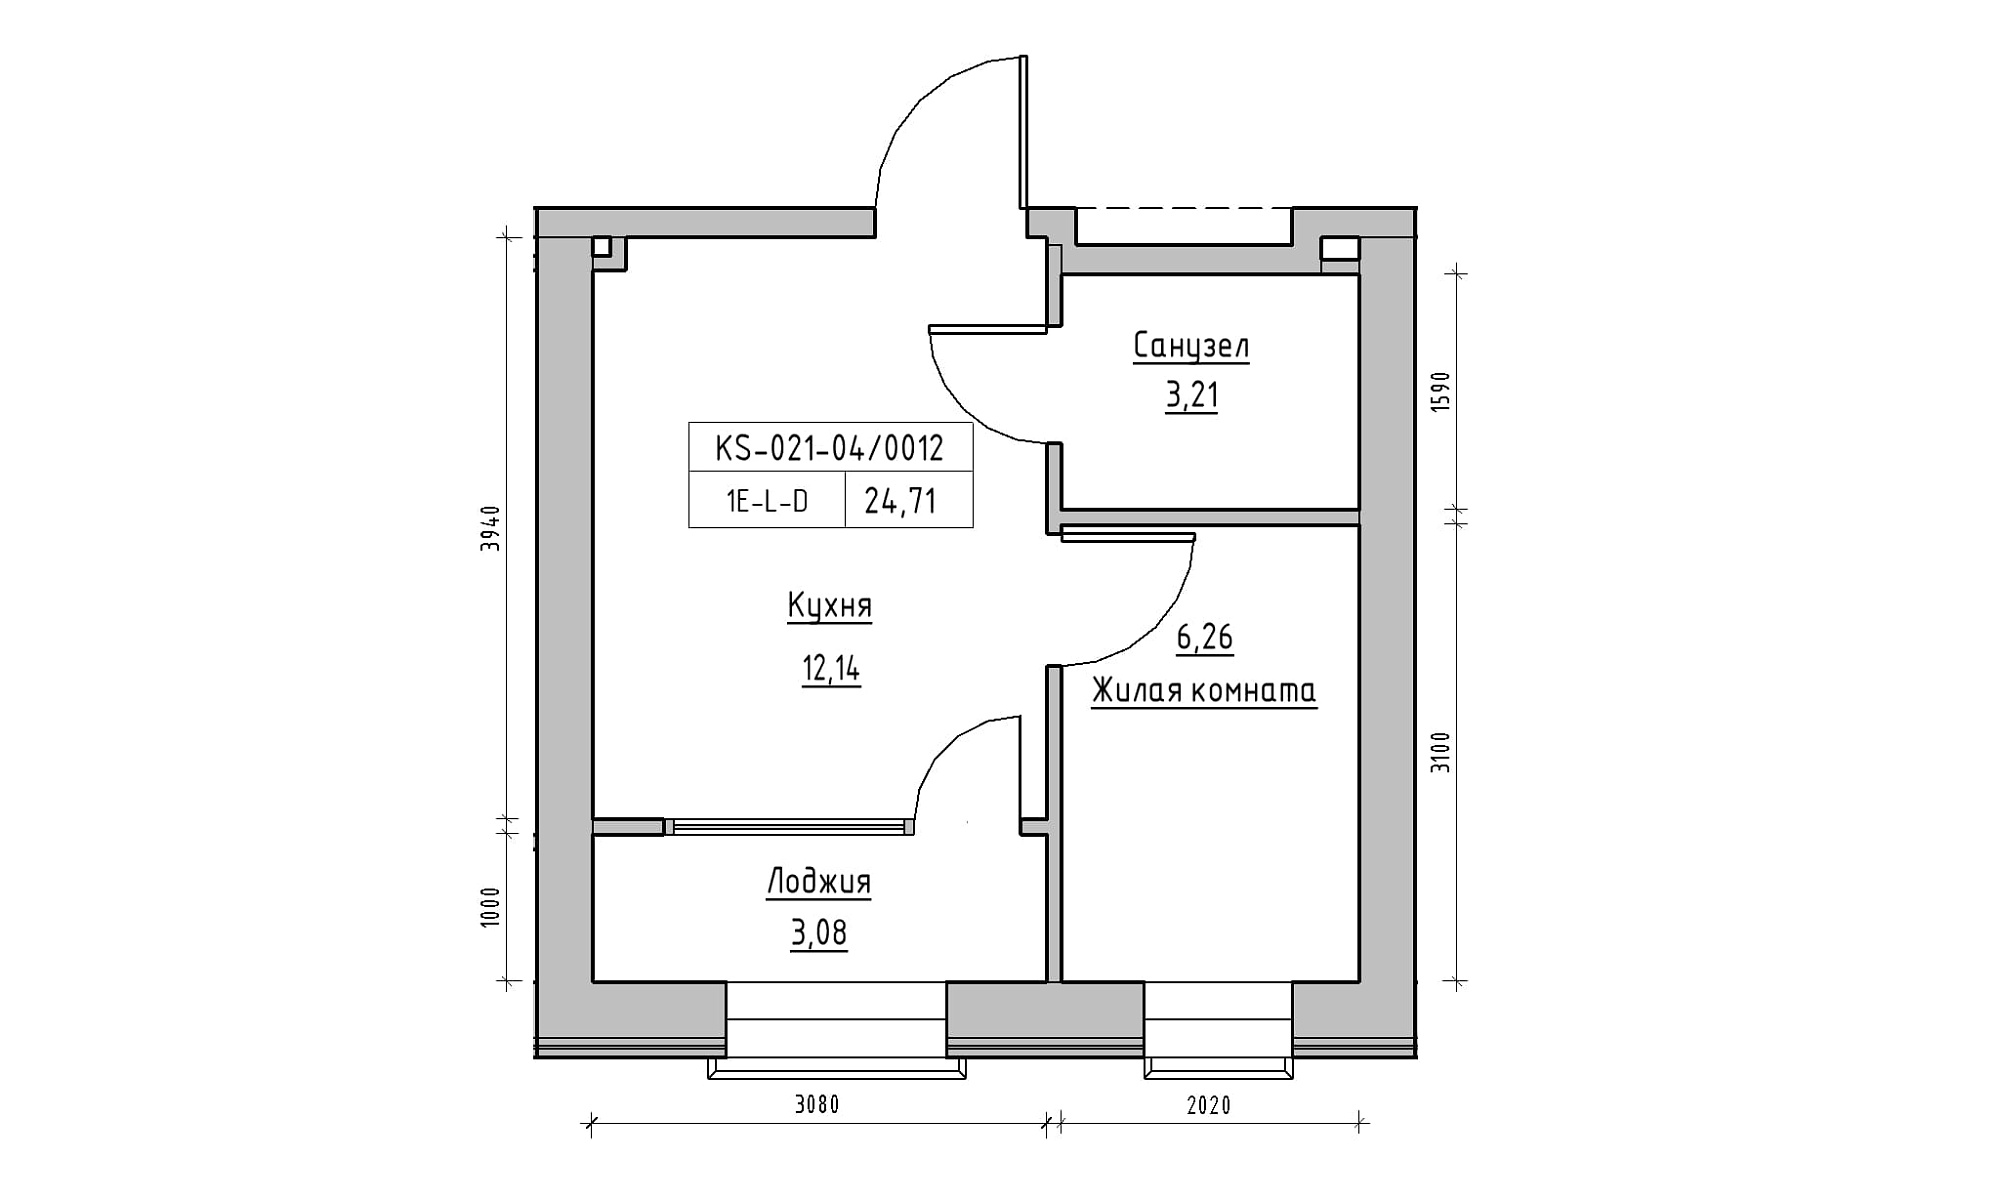 Planning 1-rm flats area 24.71m2, KS-021-04/0012.